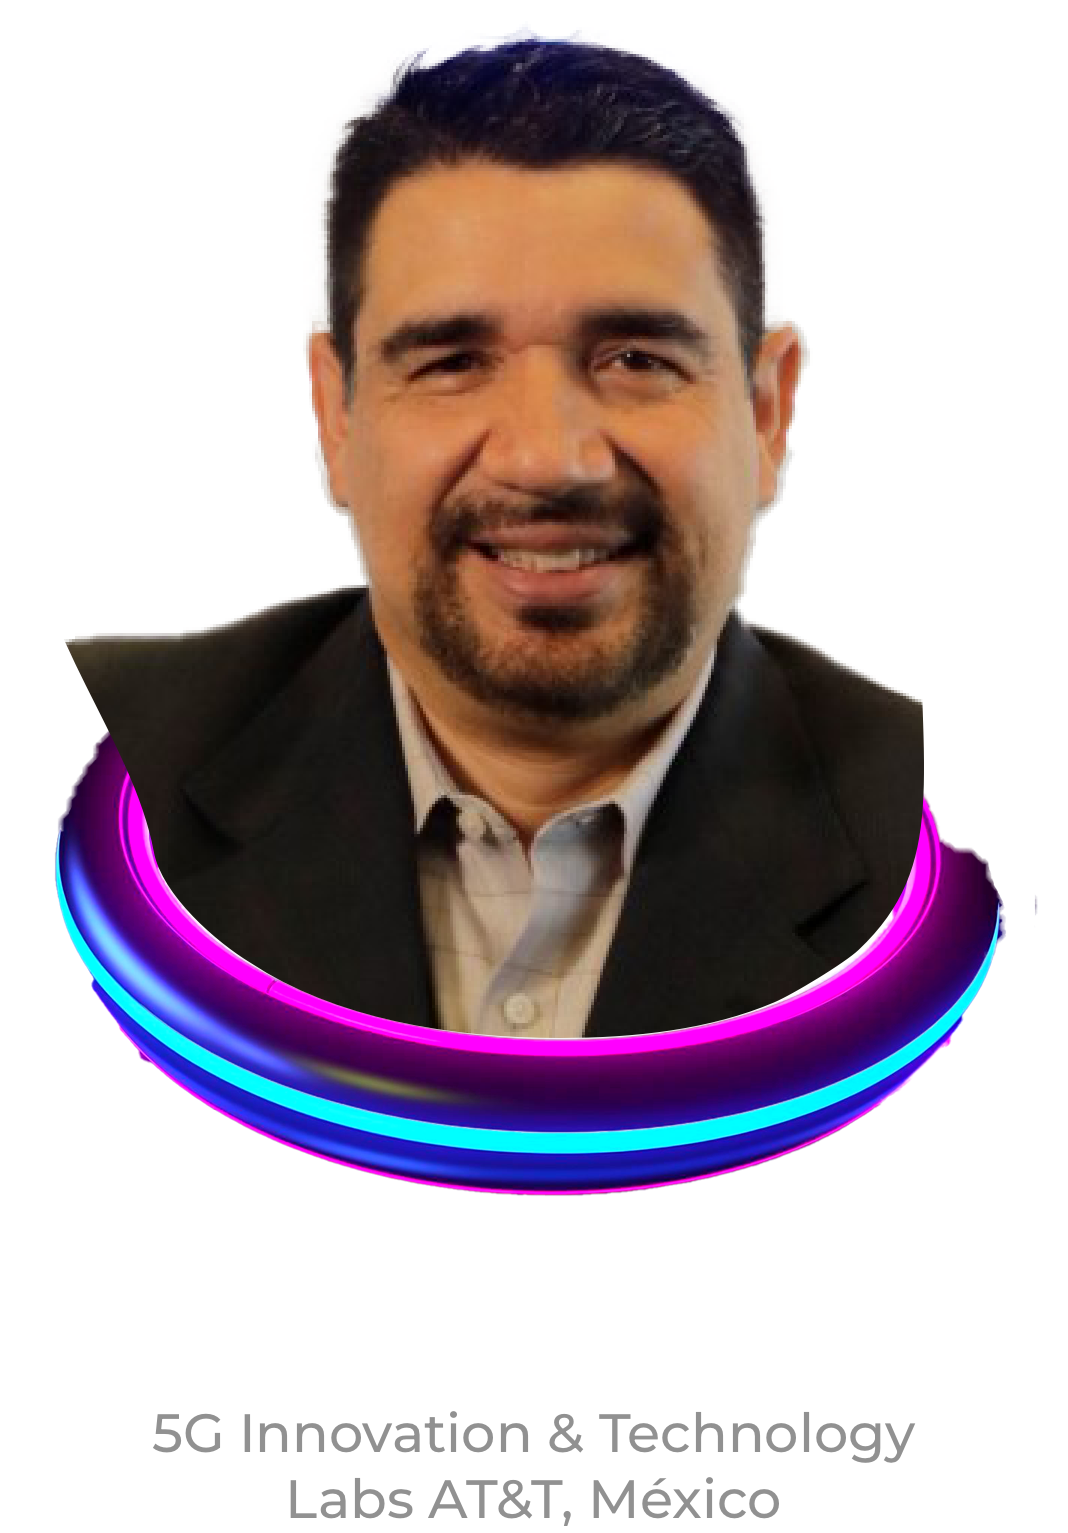 29 Arturo Barraza